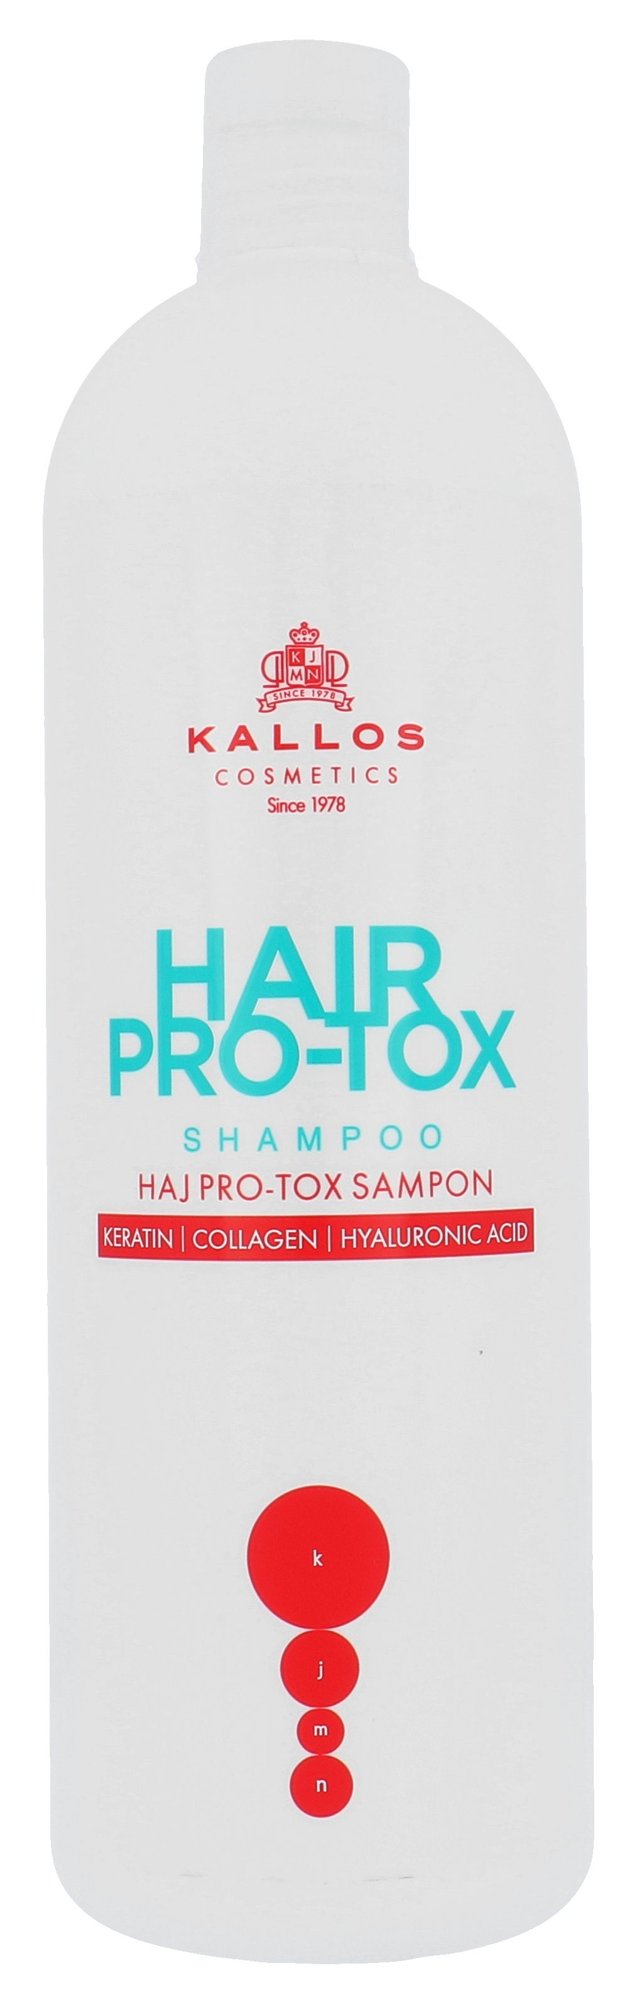 Kallos Hair Botox Shampoo